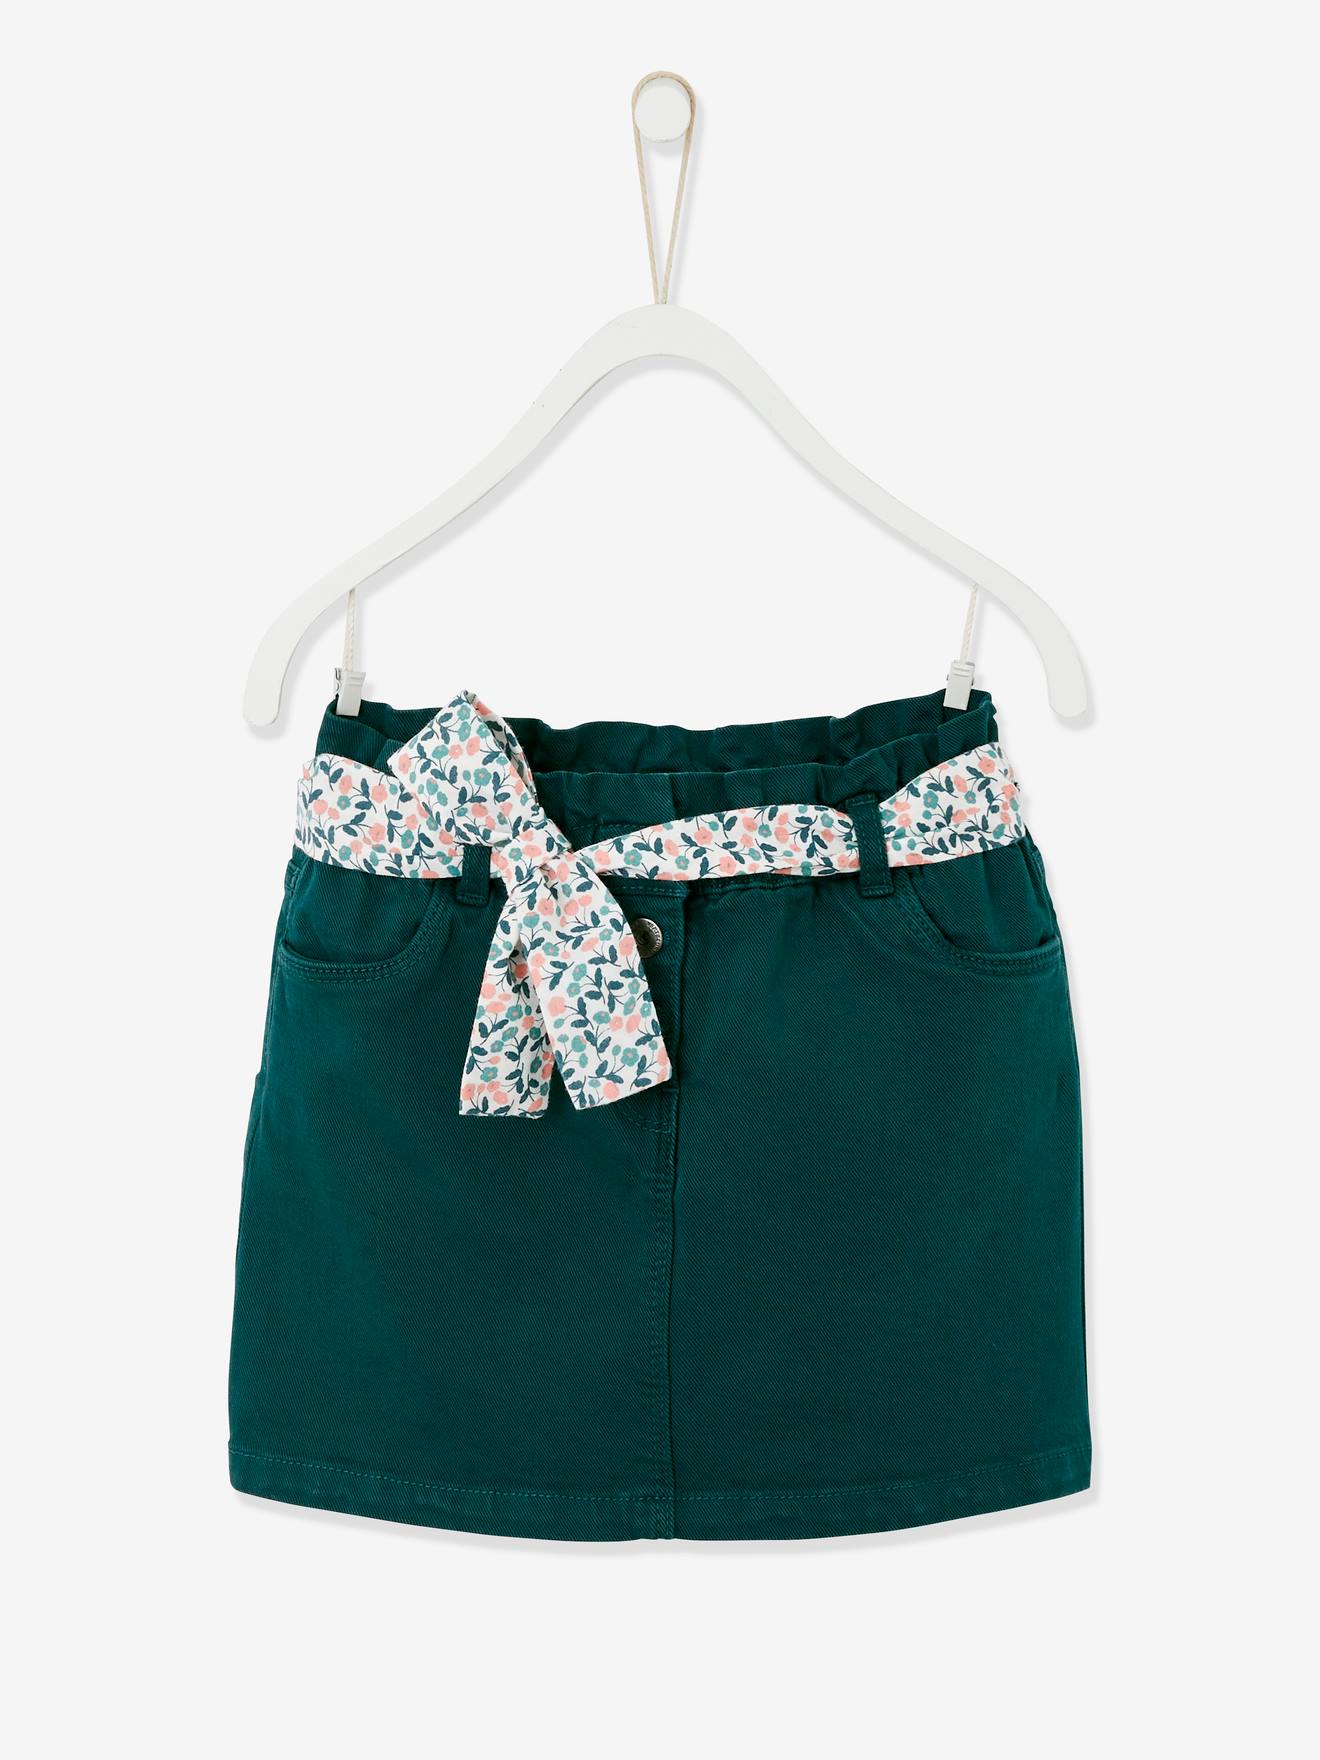 Jupe style paperbag fille ceinture foulard fleurie vert foncé